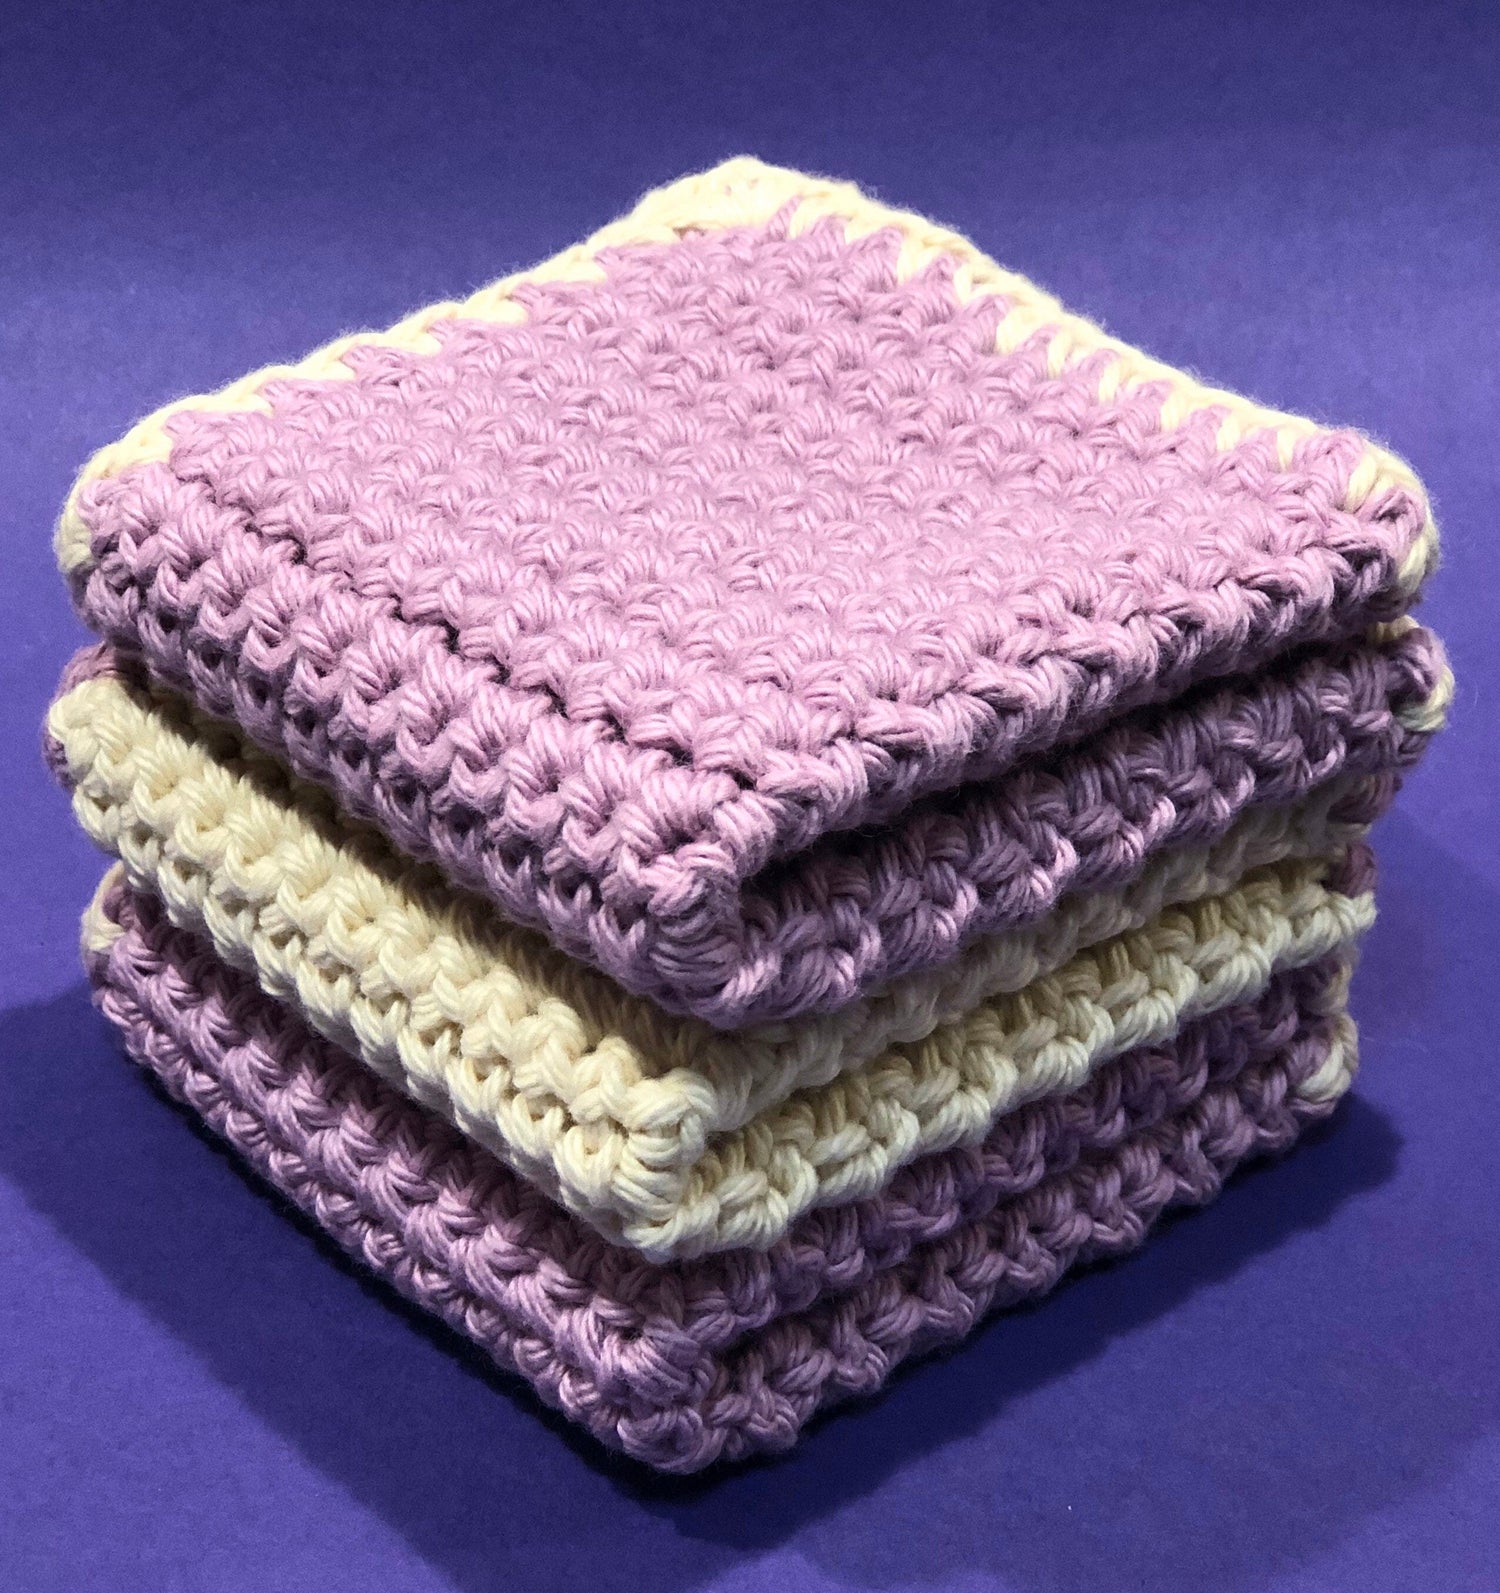 Concetta's Crafts - Crocheted dishcloths, set of 2, dishcloths, kitchen  dishcloth, wash cloths, kitchen, gift, dining, washcloth, hostess gift,  homemade  #housewares #cotton #dishcloth #washcloth  #linen #handmade #washcloths